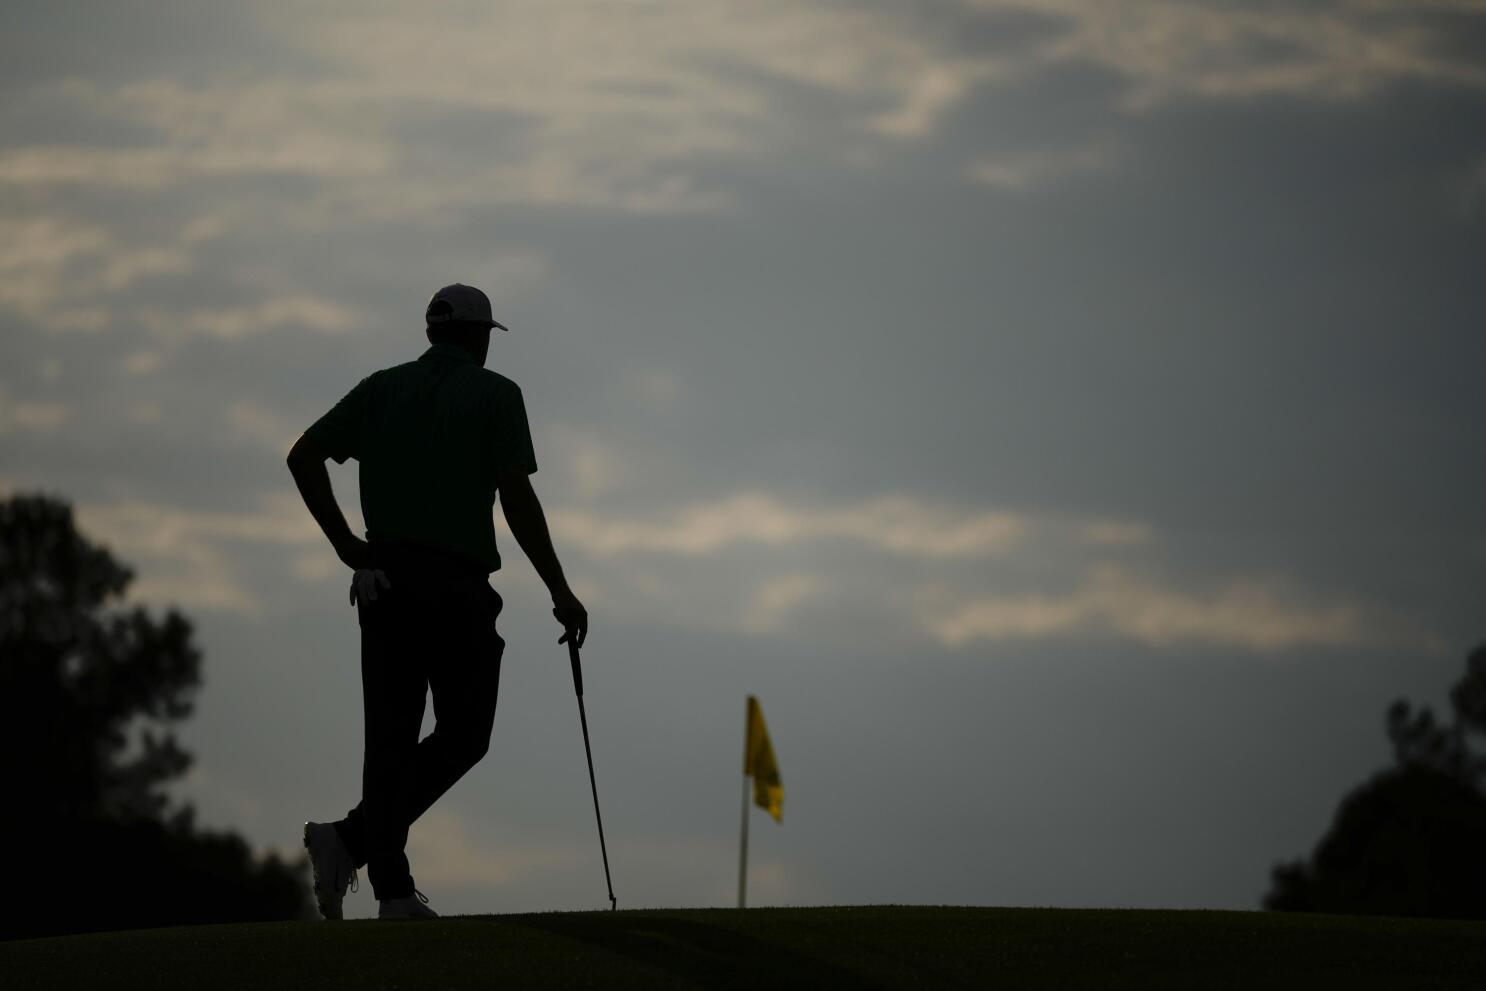 LIV Golf contingent leave mark on Masters leaderboard